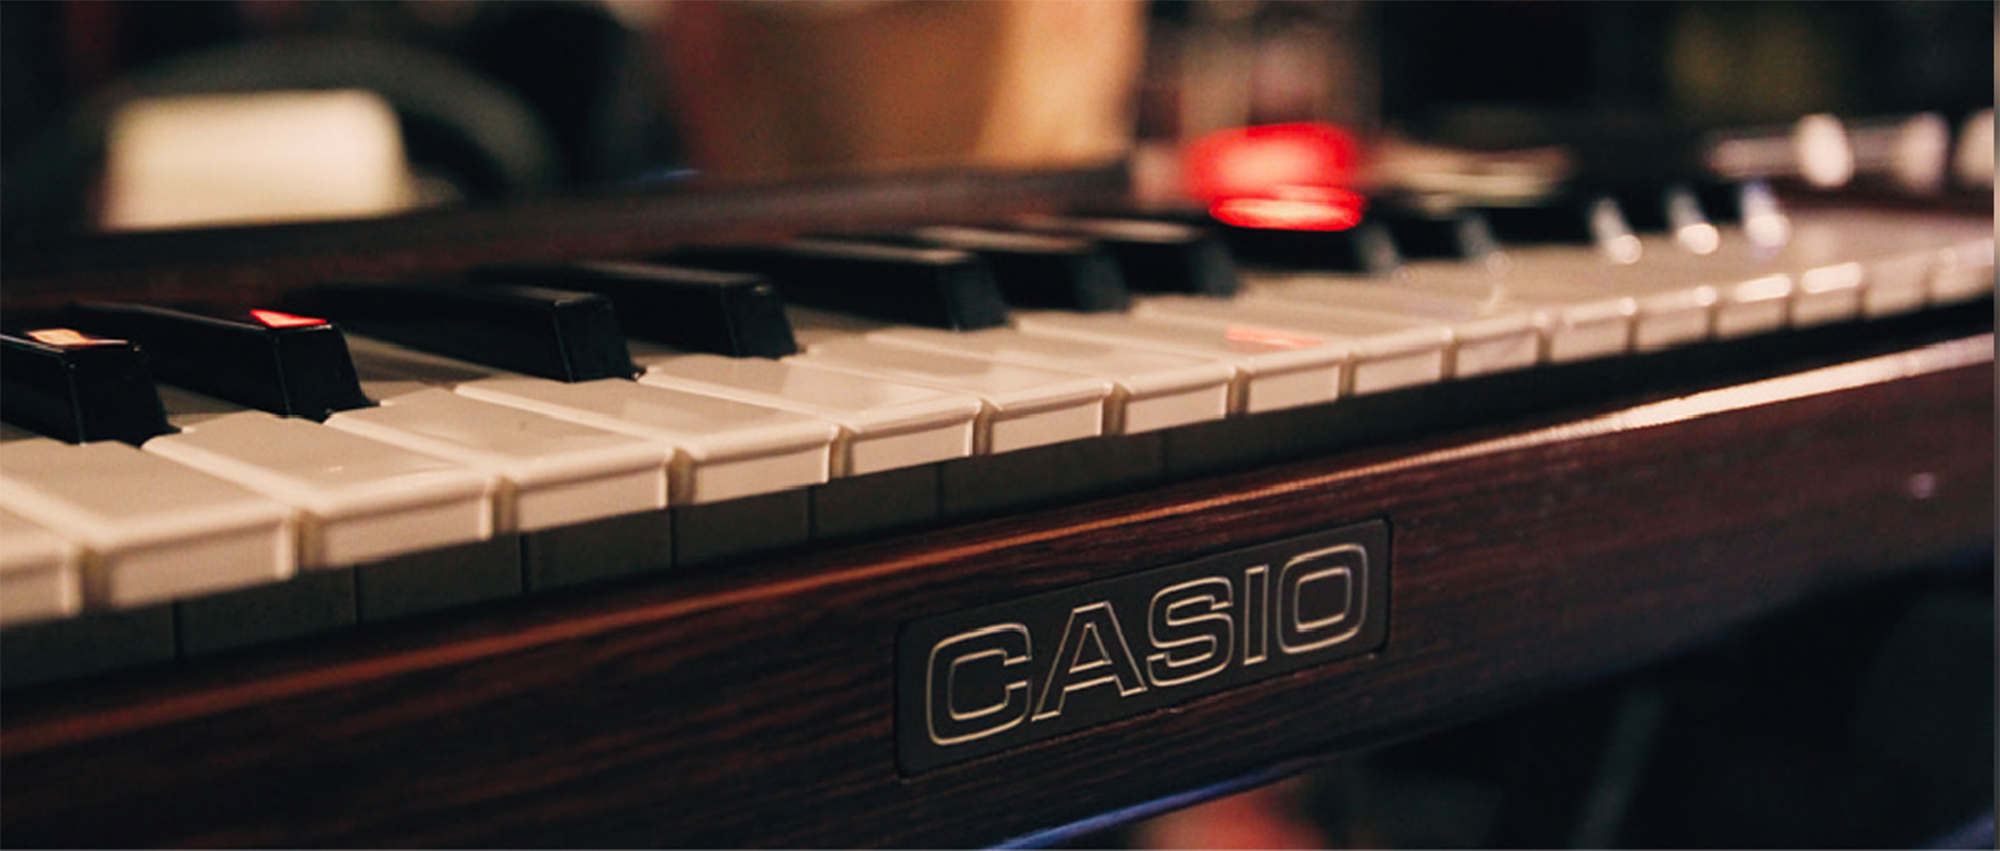 CASIO Keyboard History